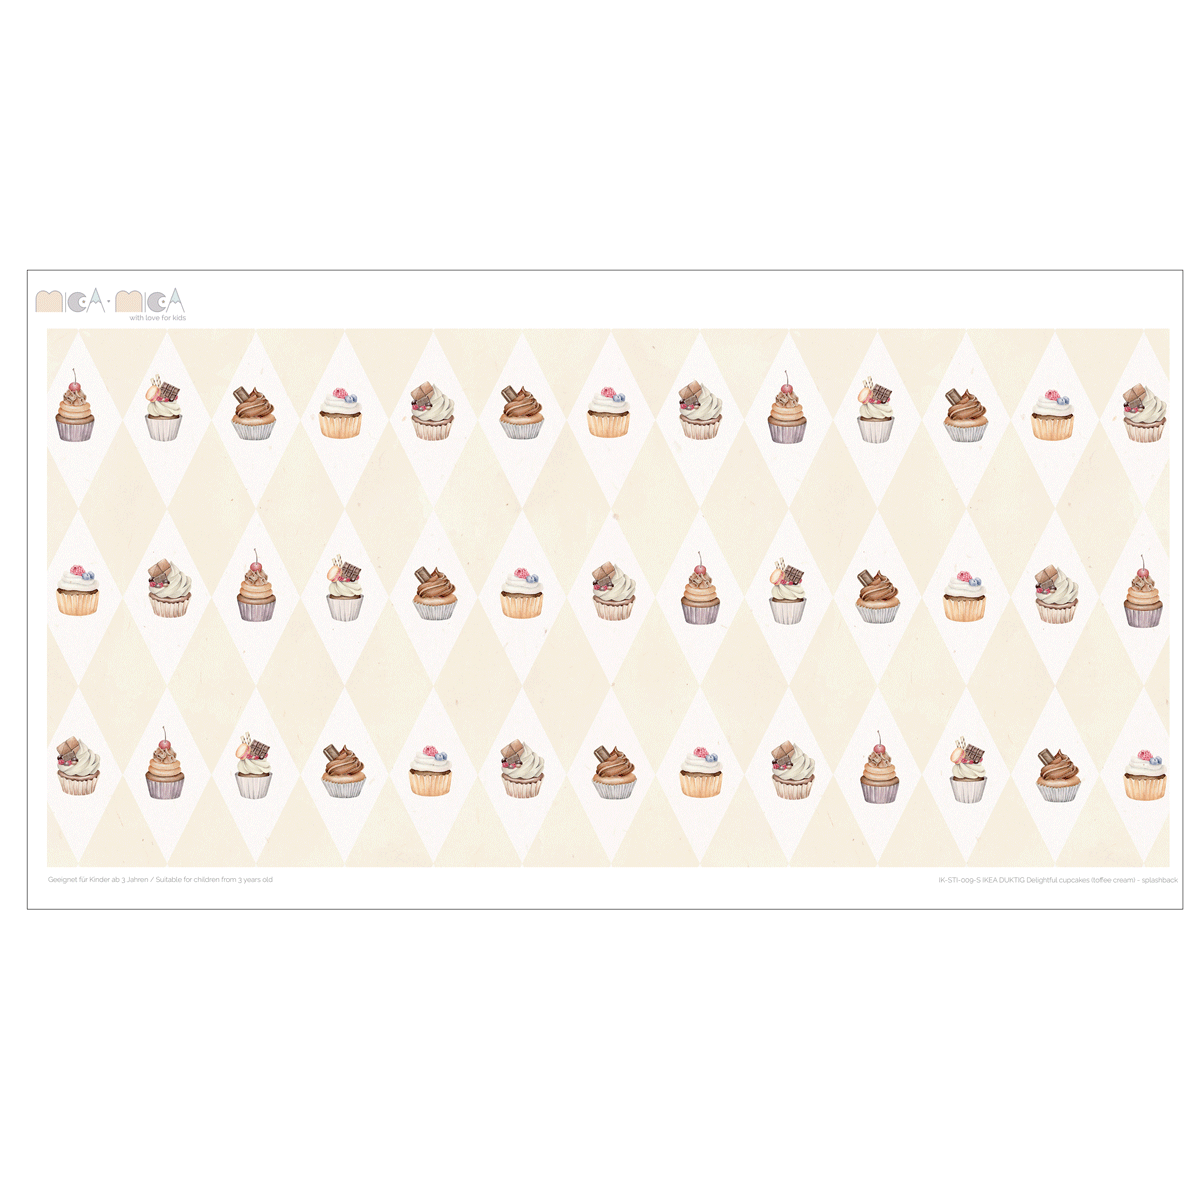 Sticker set for IKEA DUKTIG play kitchen - Delightful cupcakes (toffee cream)